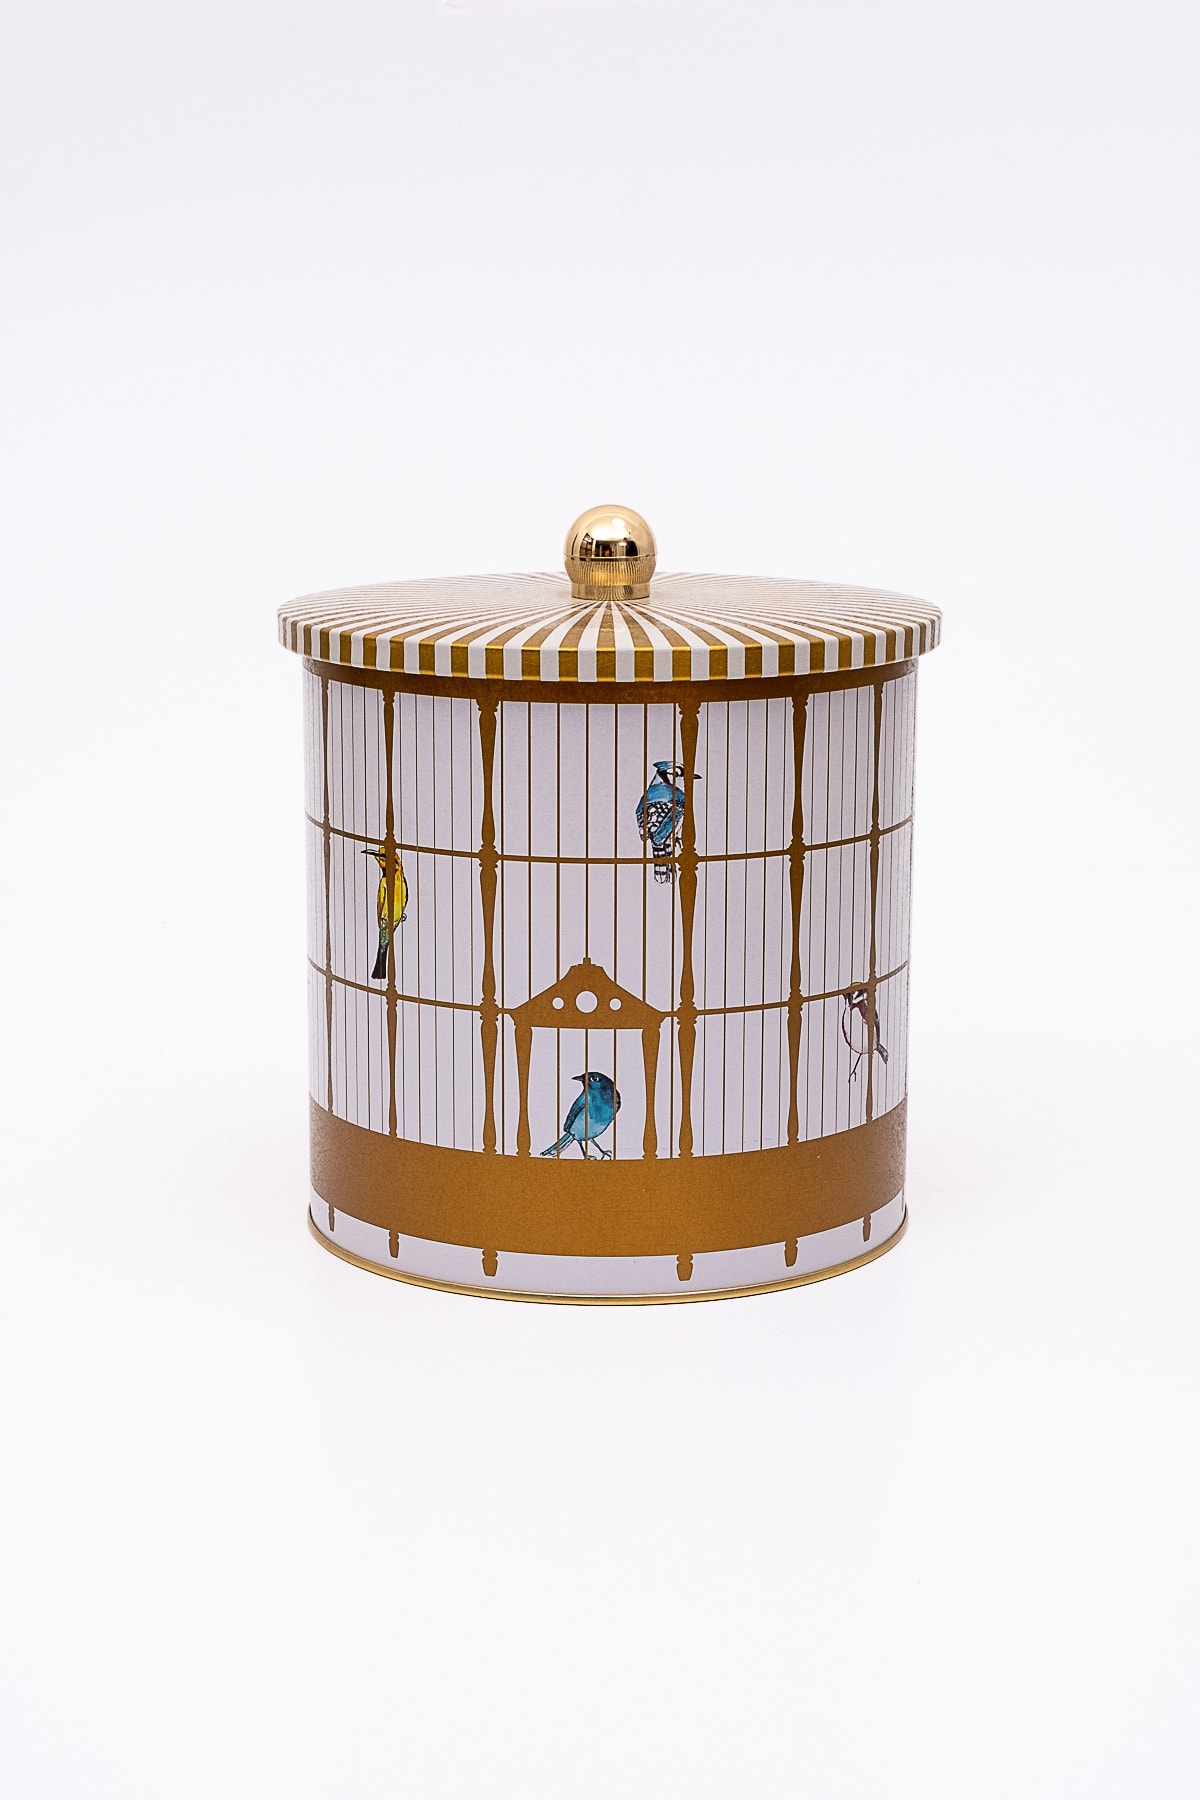 Bird Cage Desenli Topuz Kulplu Yuvarlak Metal Kutu, 17.5 x 18 cm, 4.1 lt